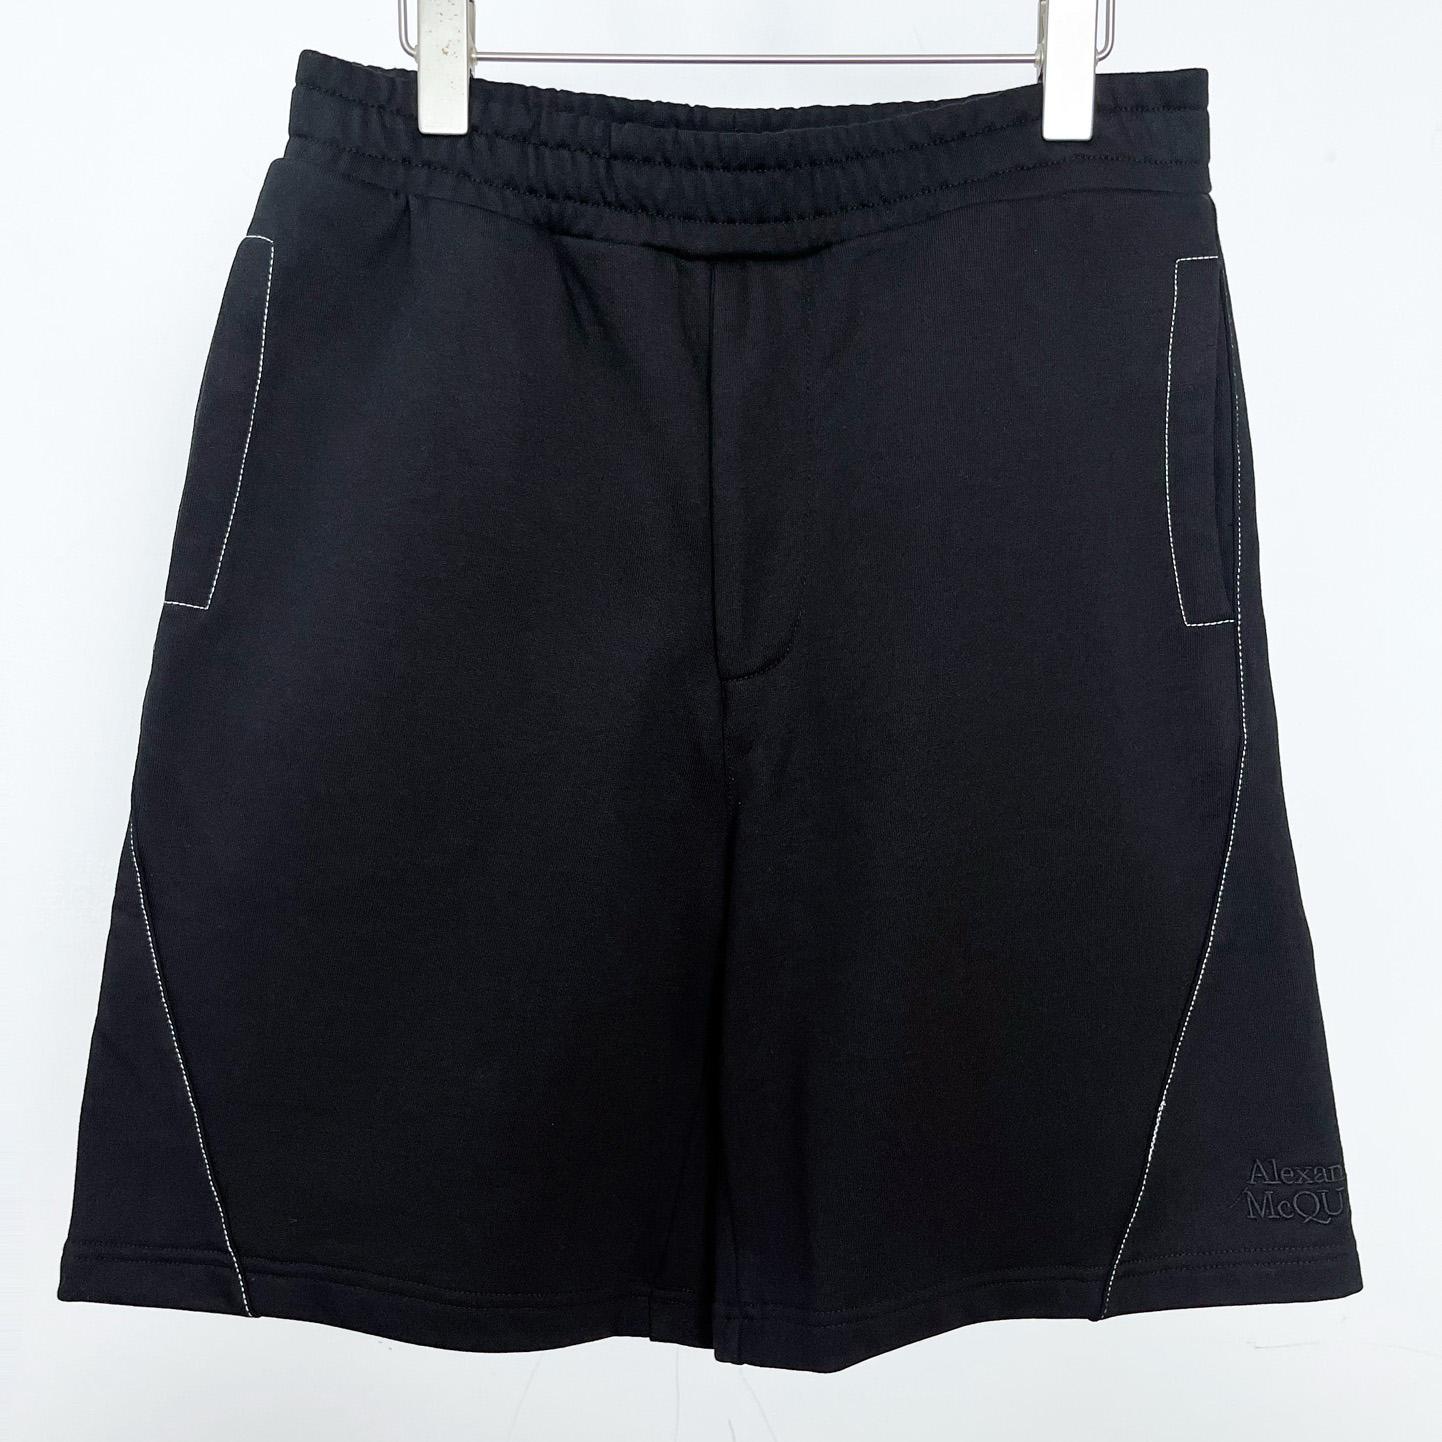 Alexander Mqueen Sporty shorts - everydesigner